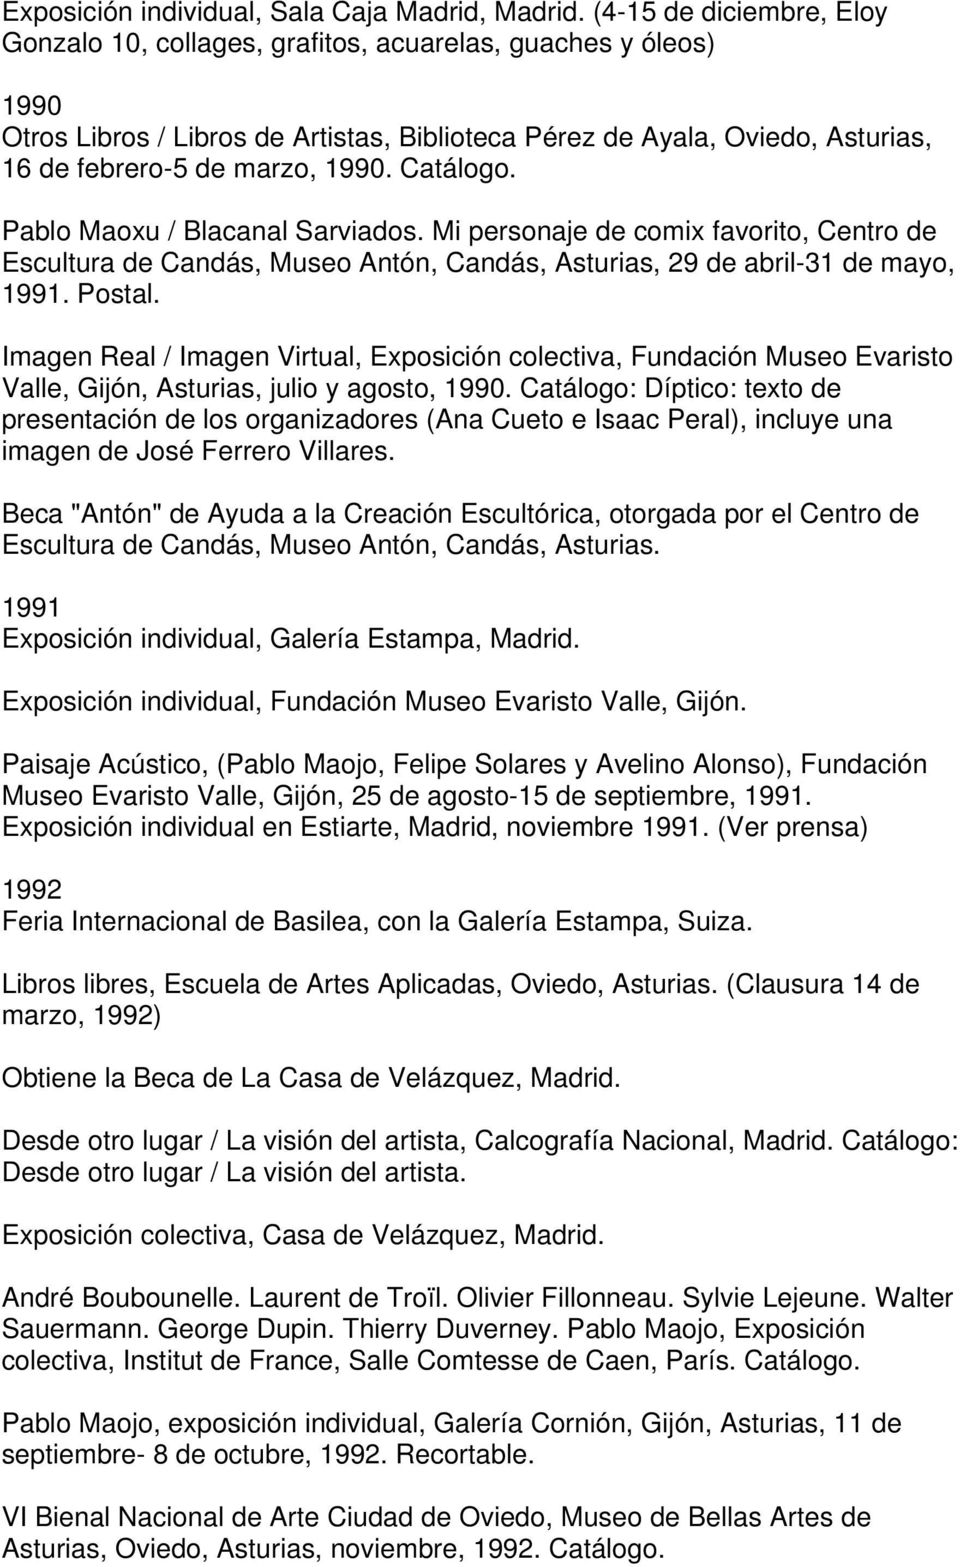 1990. Catálogo. Pablo Maoxu / Blacanal Sarviados. Mi personaje de comix favorito, Centro de Escultura de Candás, Museo Antón, Candás, Asturias, 29 de abril-31 de mayo, 1991. Postal.